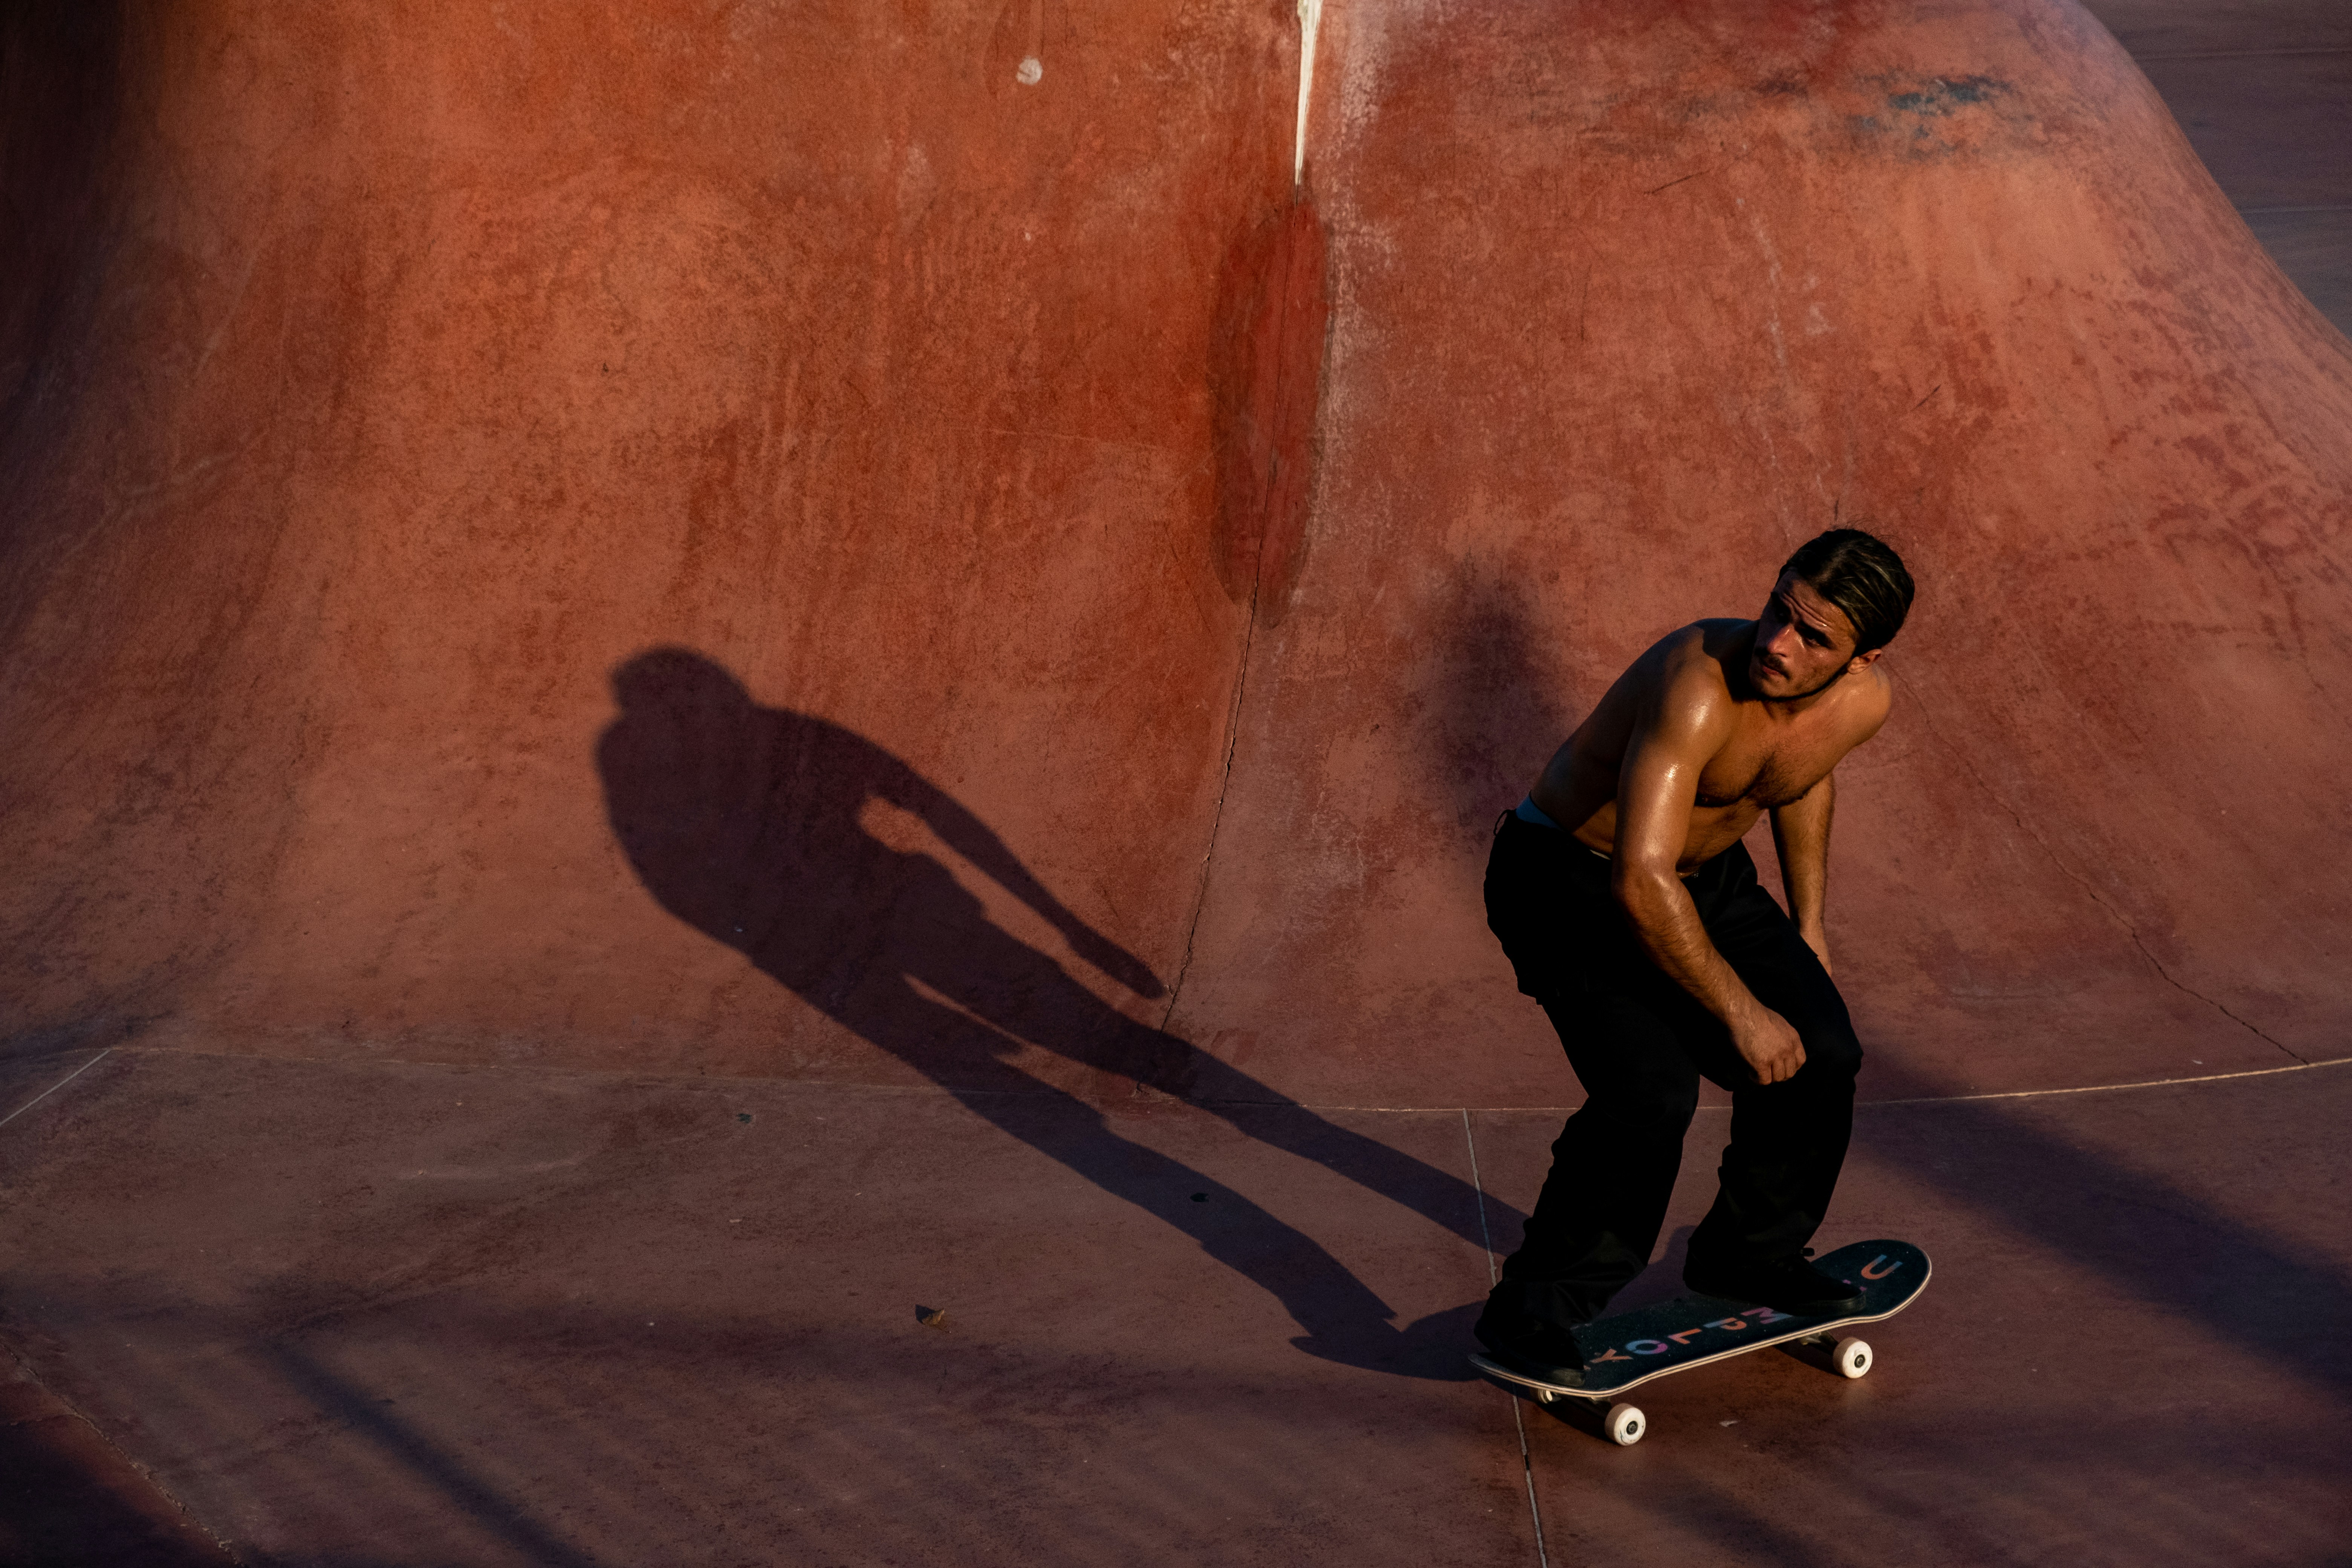 Topless Skateboarding